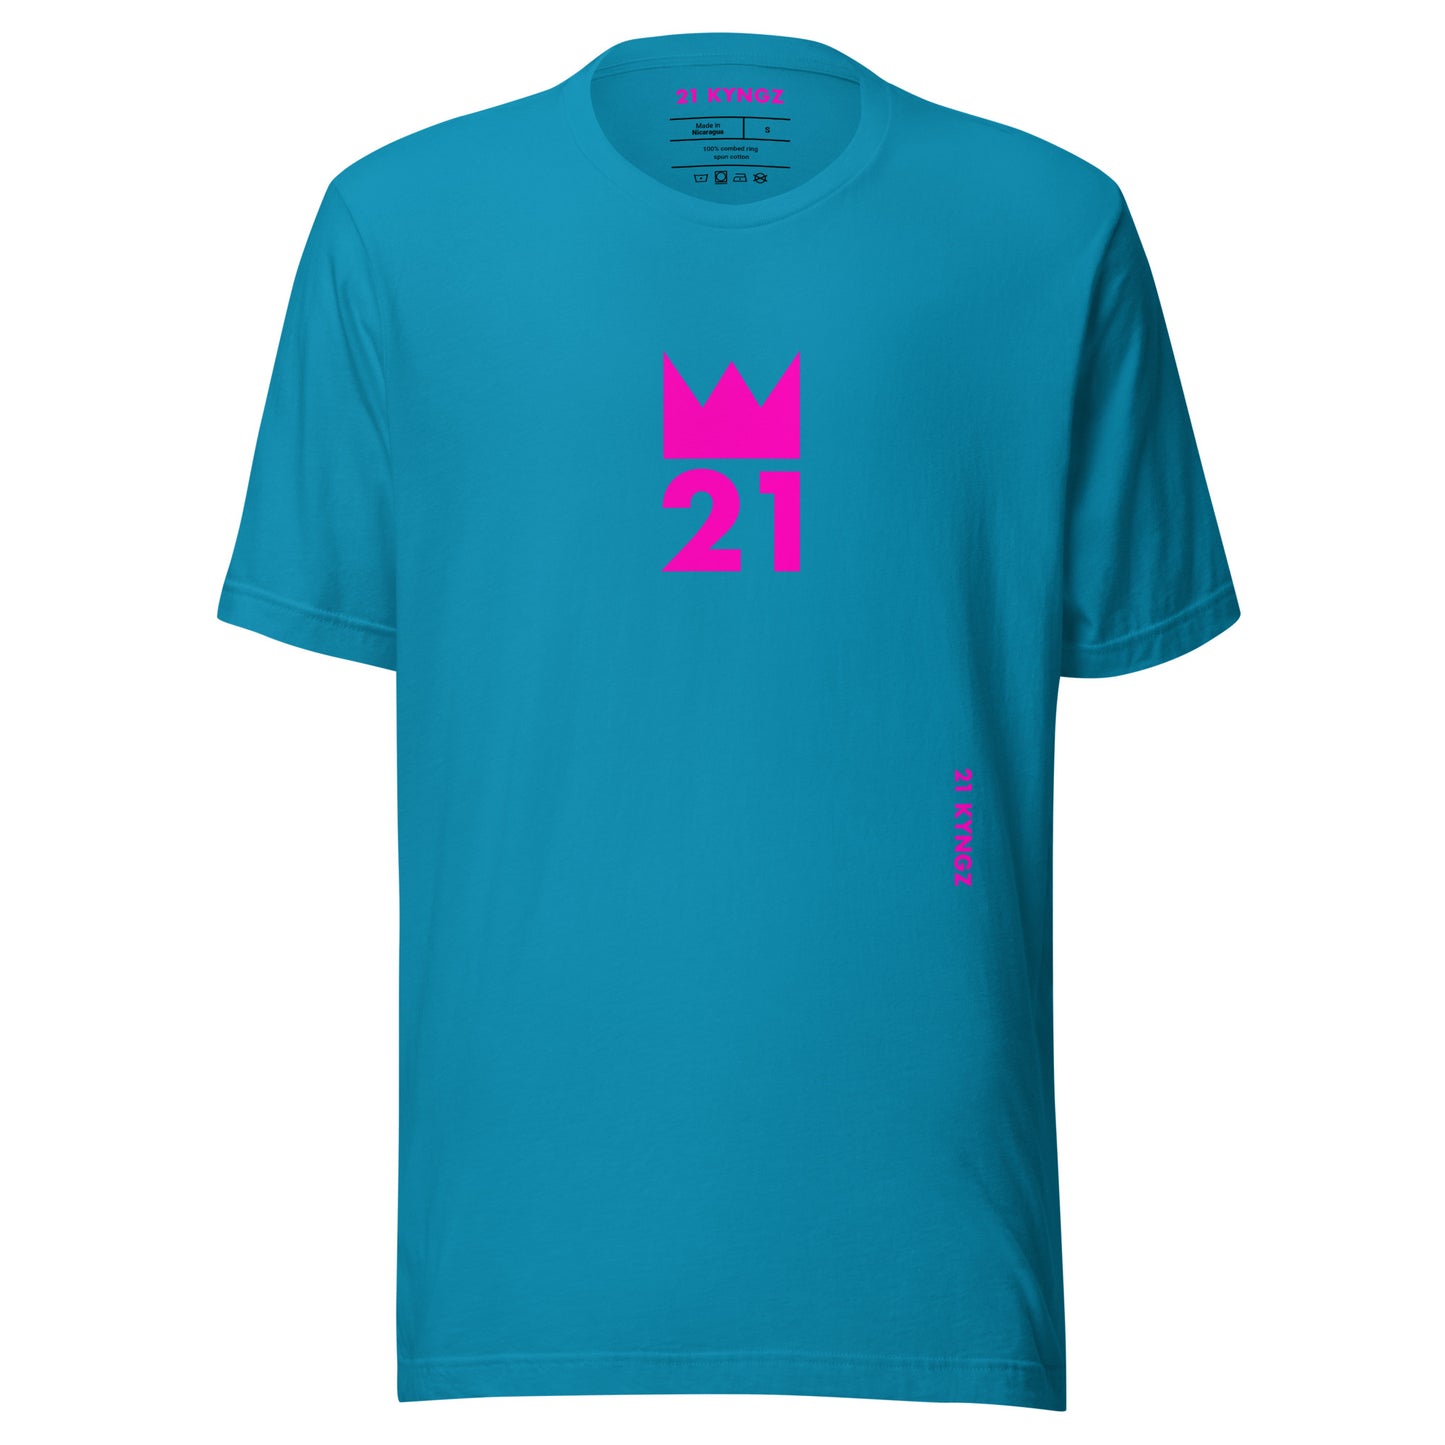 21 KYNGZ (Pi)2 t-shirt